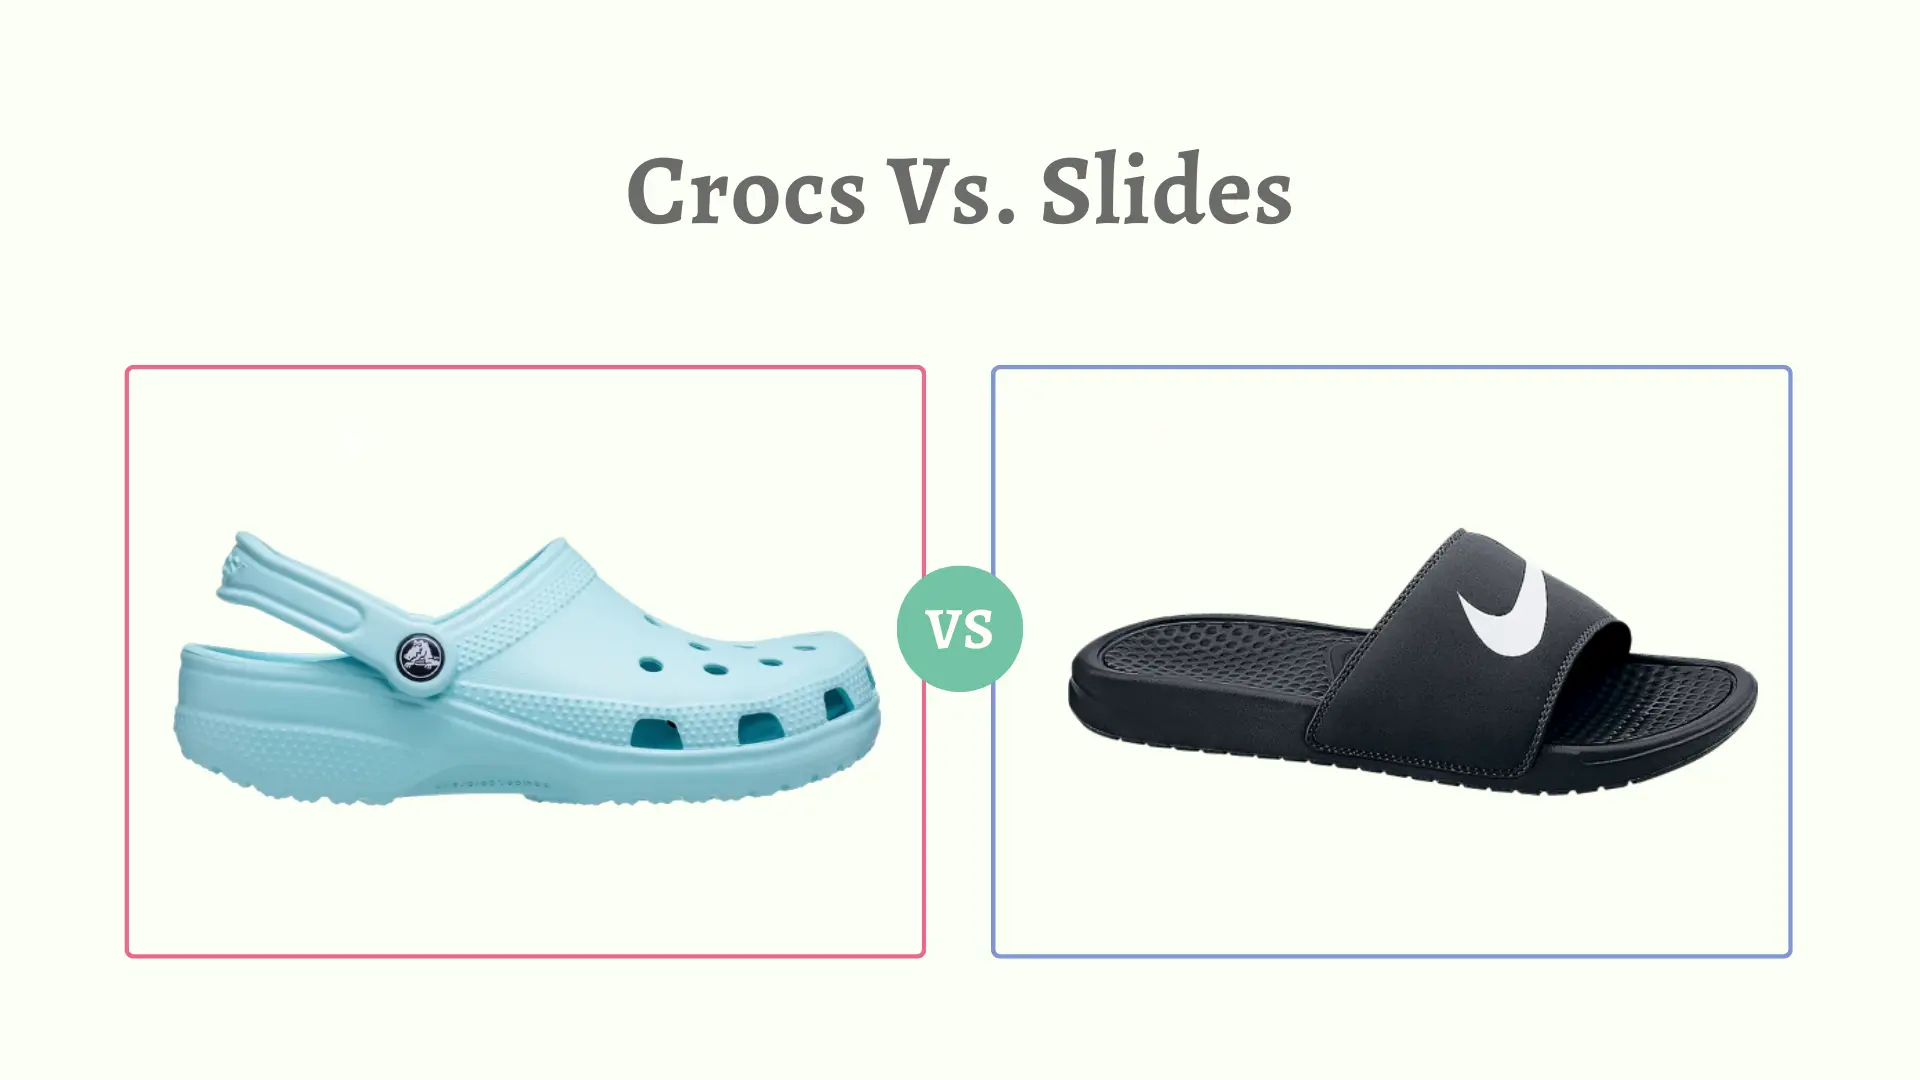 Crocs Vs. Slides